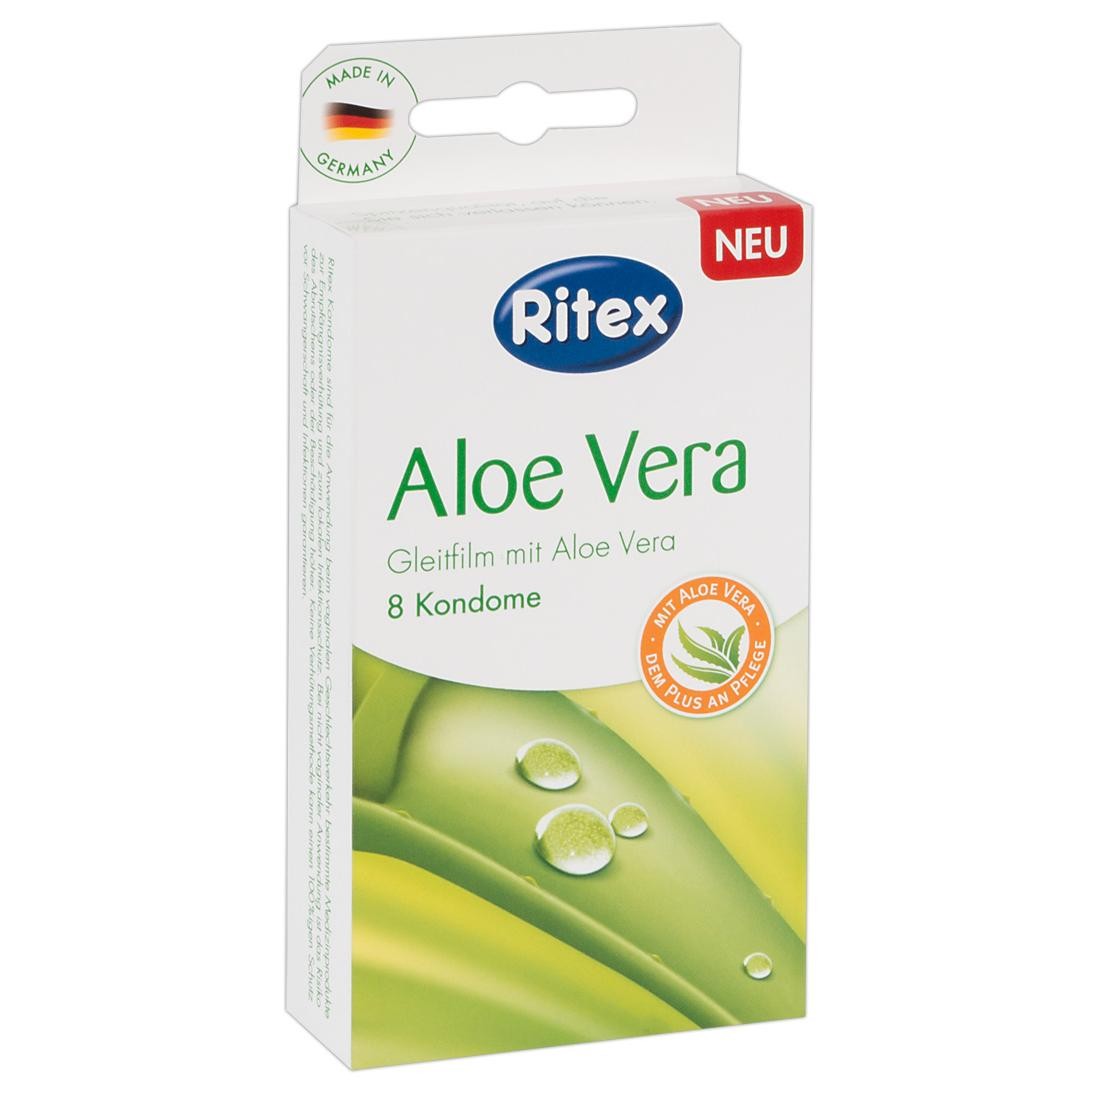  Ritex  Aloe  Vera  8er  -  Kondome 